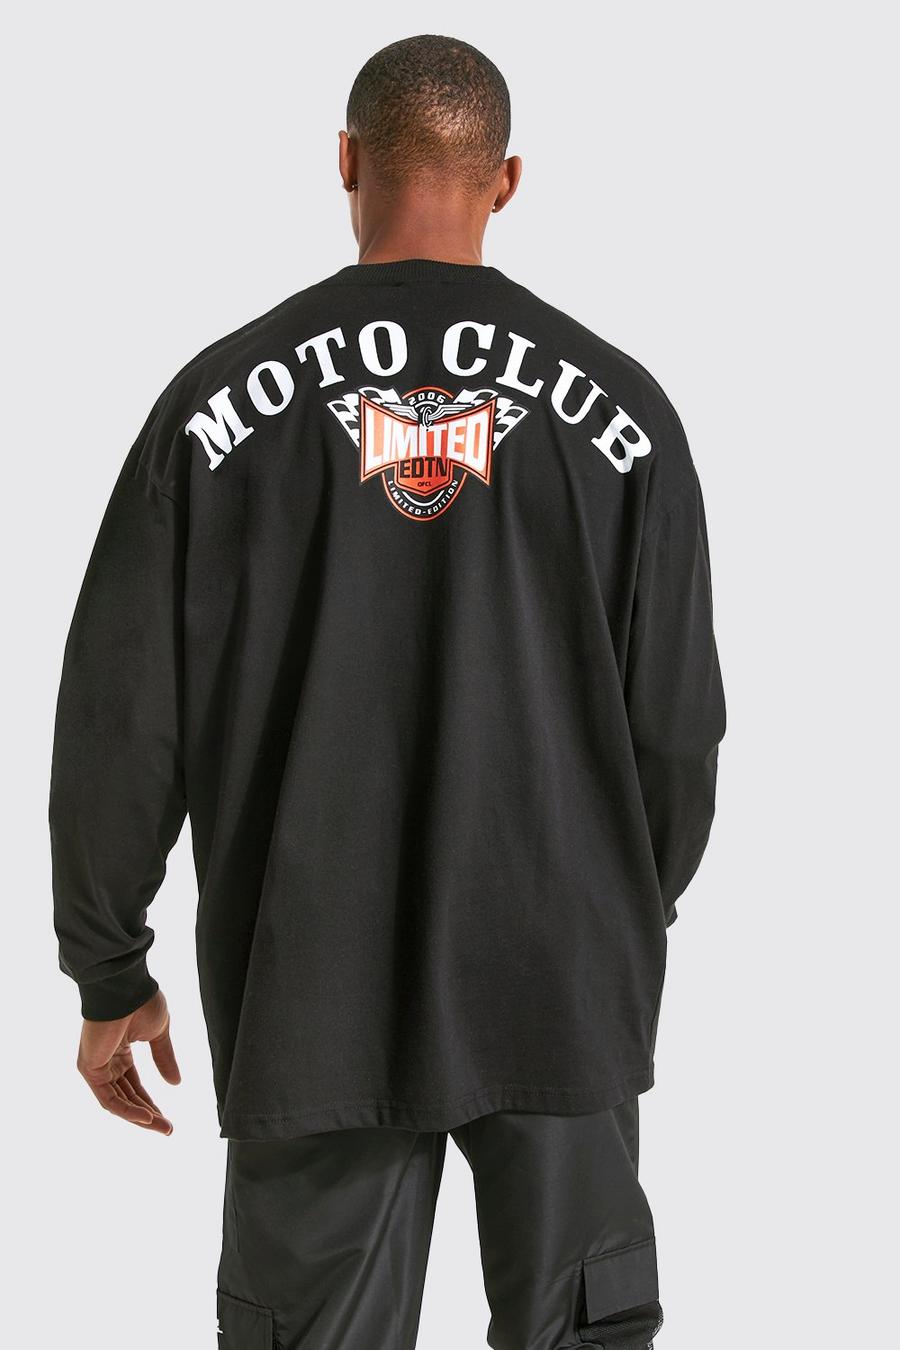 Langärmliges Oversize T-Shirt mit Moto Club Print, Black schwarz